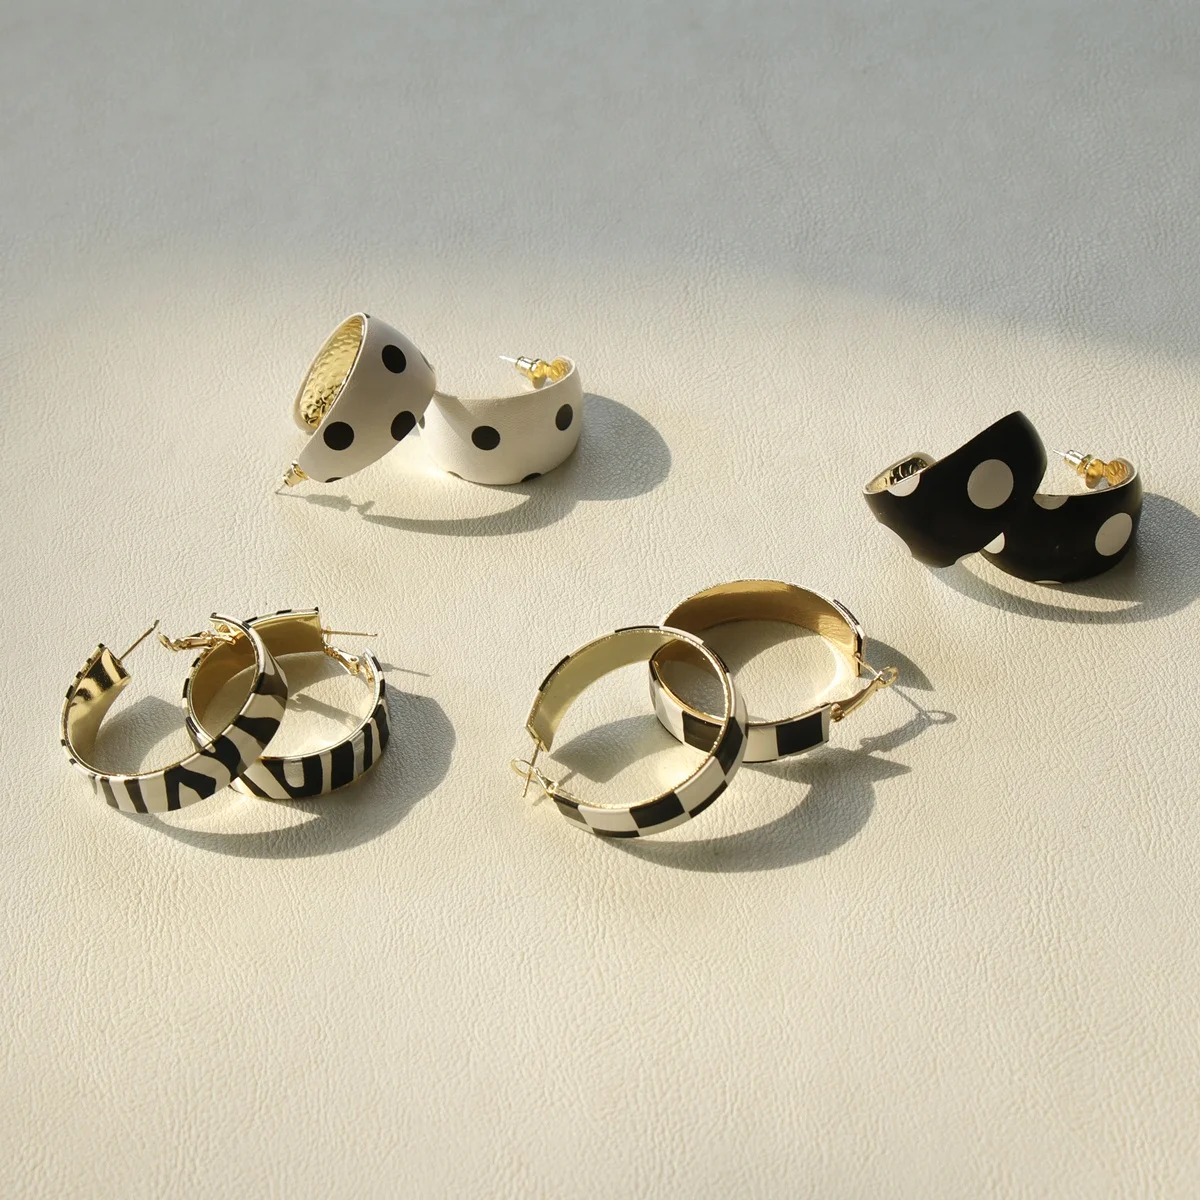 

ouye fashion jewelry metal earrings candy color enamel dripping oil C pendant earrings women wholesale, Picture show